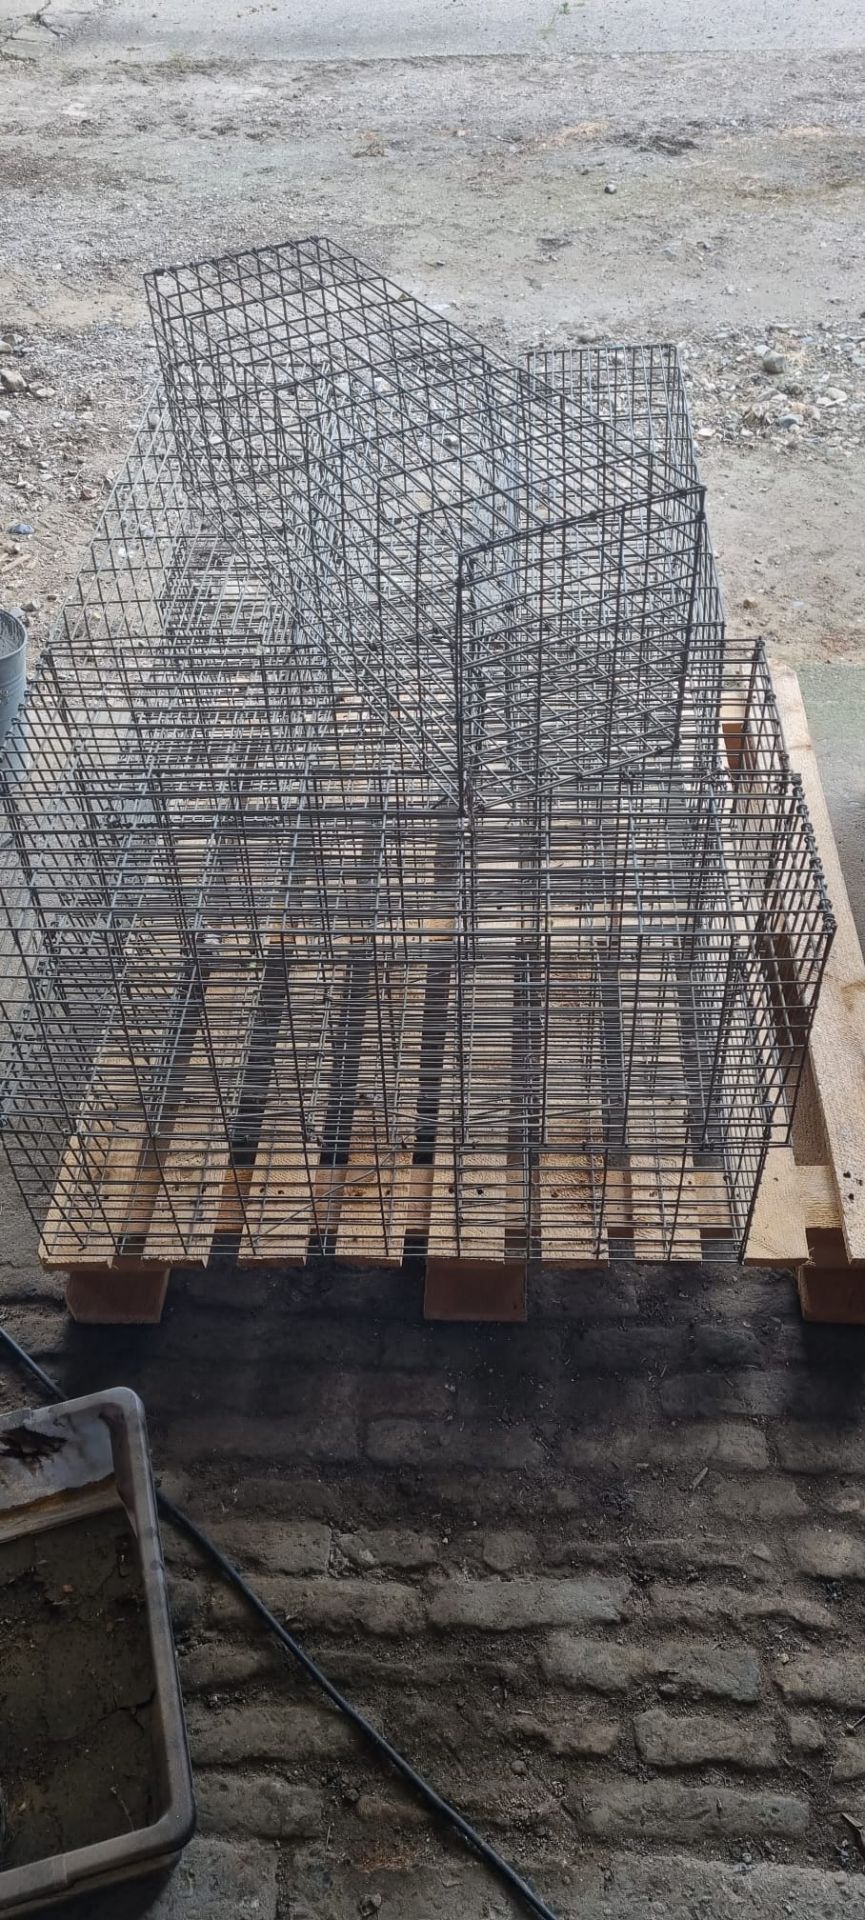 11 x Rabbit cages